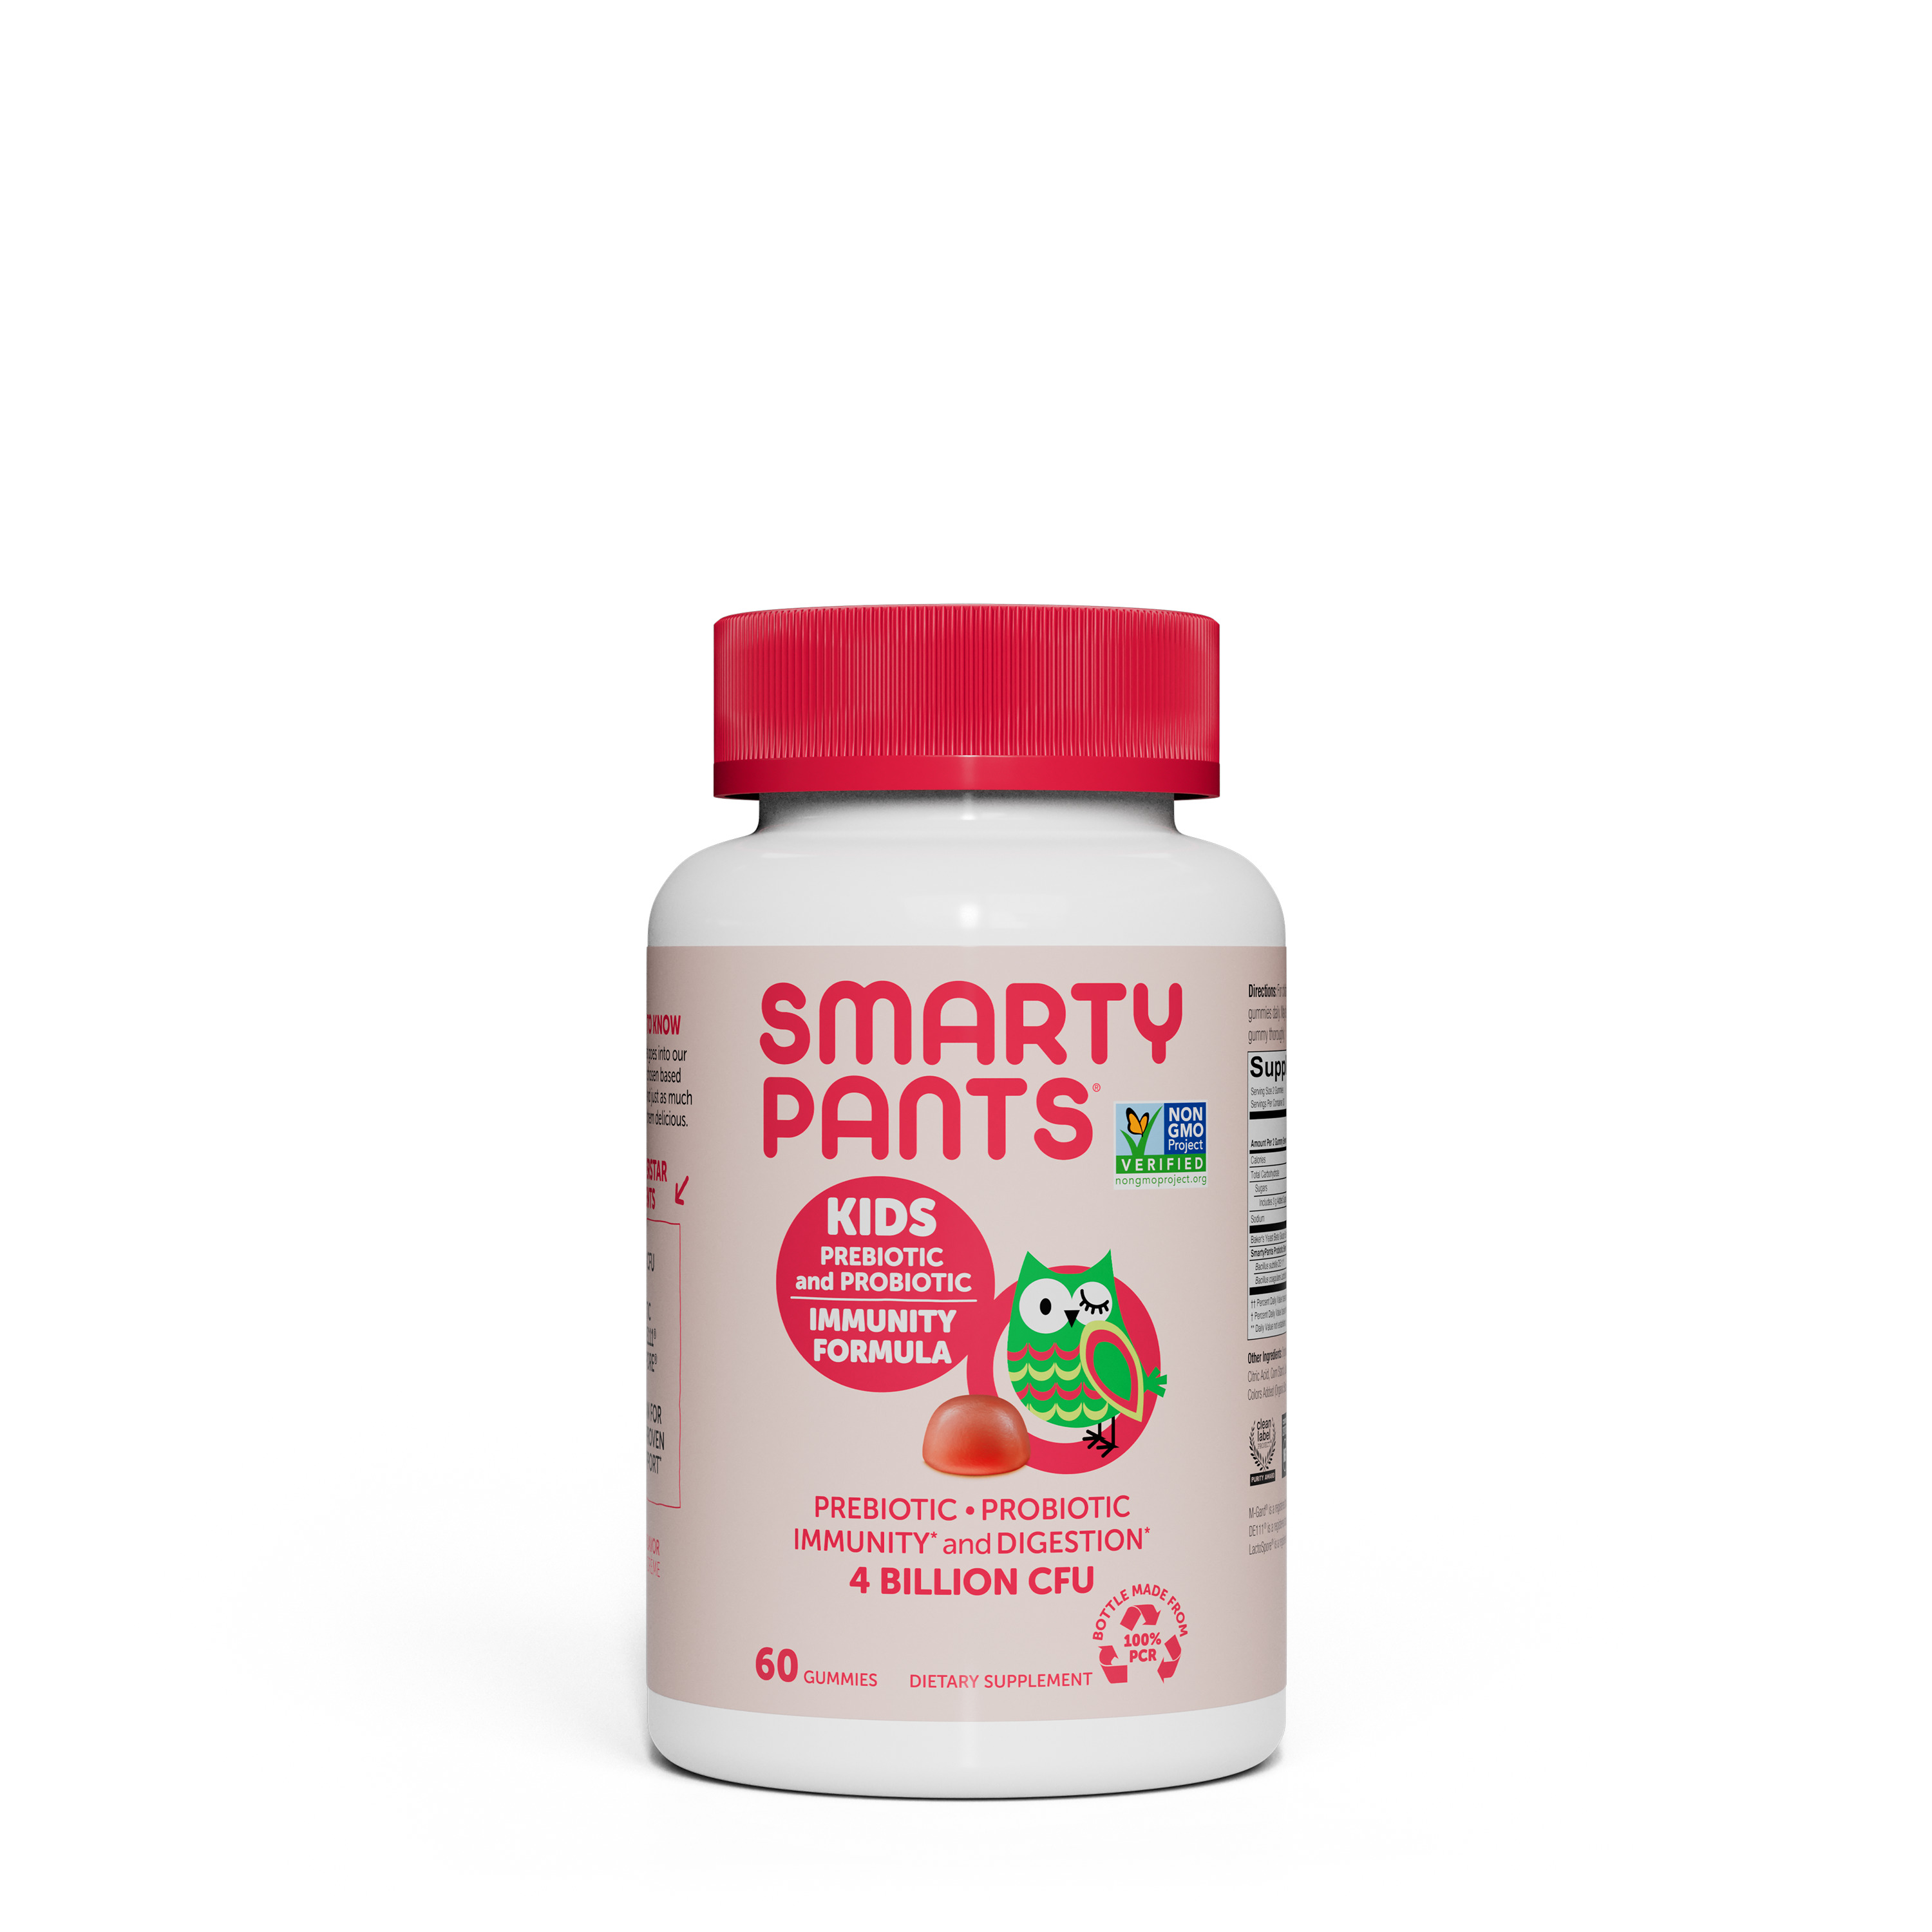 SmartyPants Kids Prebiotic & Probiotic Immunity & Digestive Health Gummy Vitamins - Strawberry CrÃ¨me - 60ct - image 2 of 8